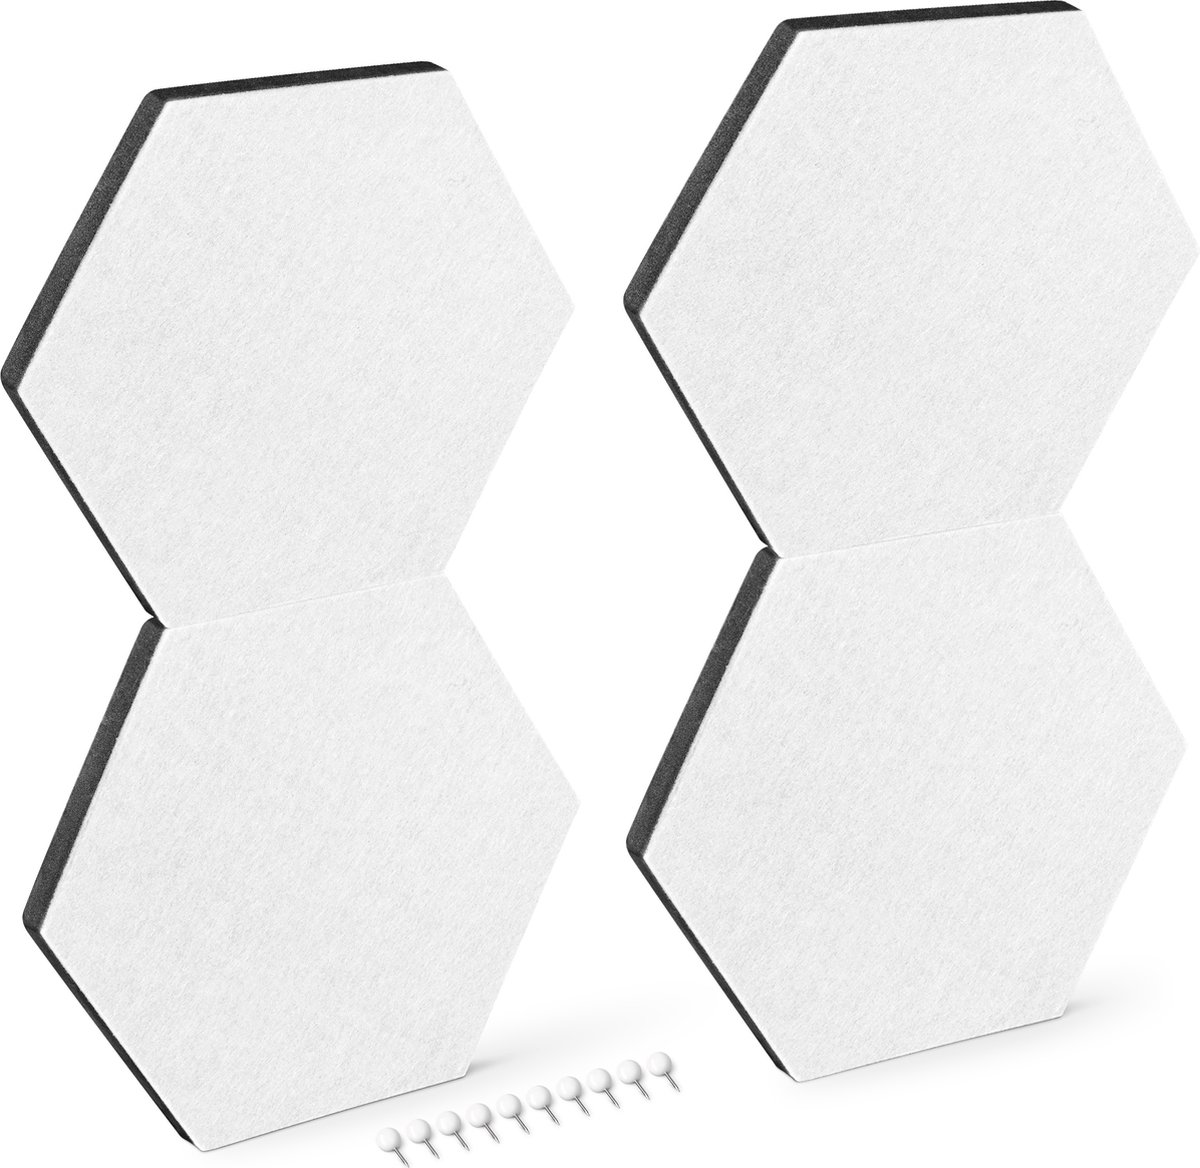 Navaris prikbord van vilt - 4 tegels zeshoekig - Vilten memobord - Inclusief punaises en zelfklevende tape - 20 x 17 cm - Wit - Navaris